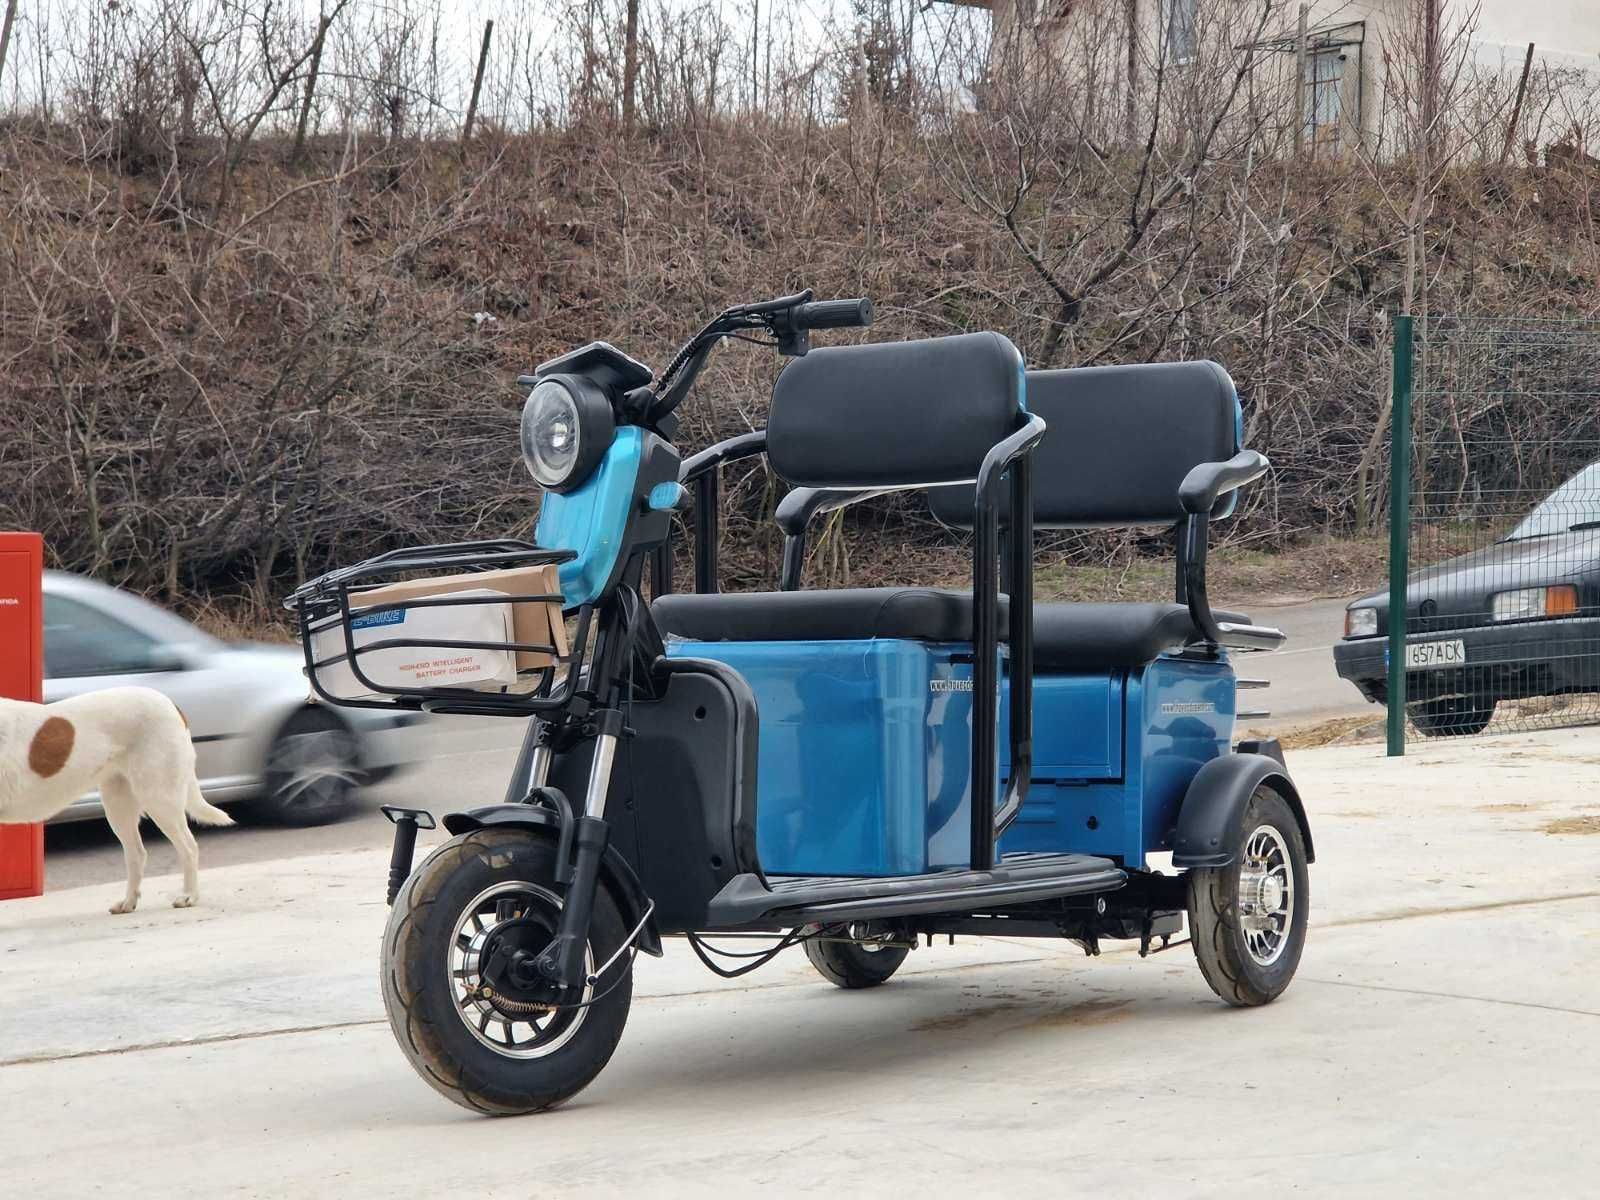 PROMO! Tricicleta electrica adulti 2 BANCHETE/ Garantie, livrare acasa